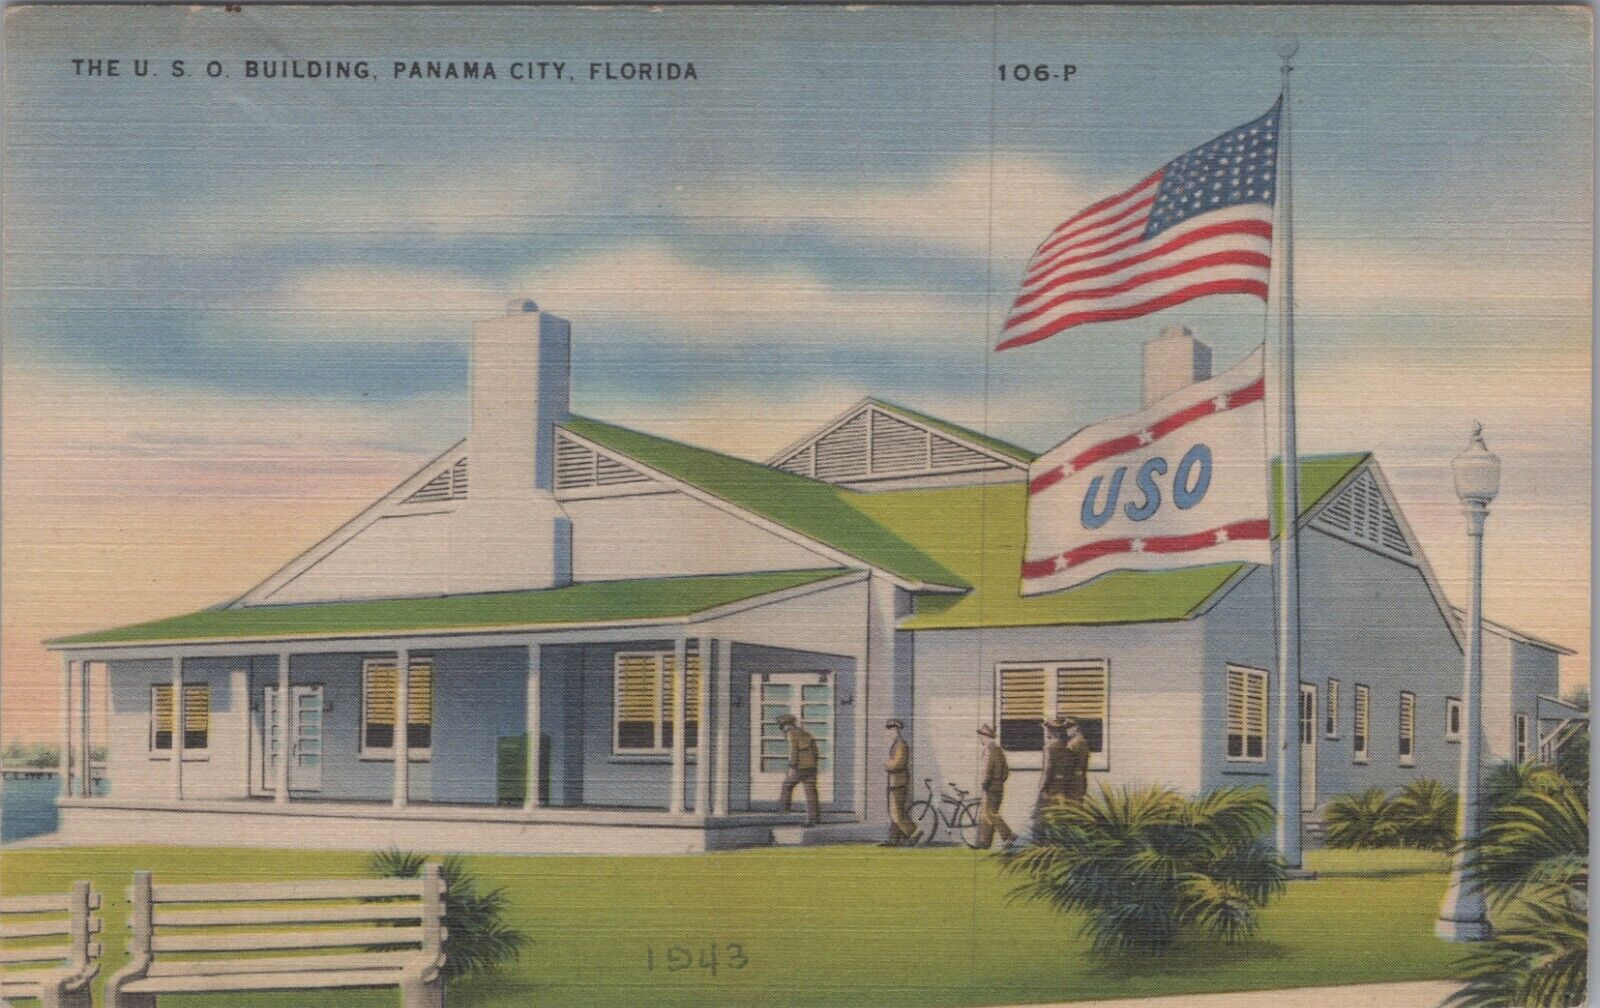 USO U.S.O. Building Panama City Florida FL Flags c1930s Postcard B3991.D1 MR ALE